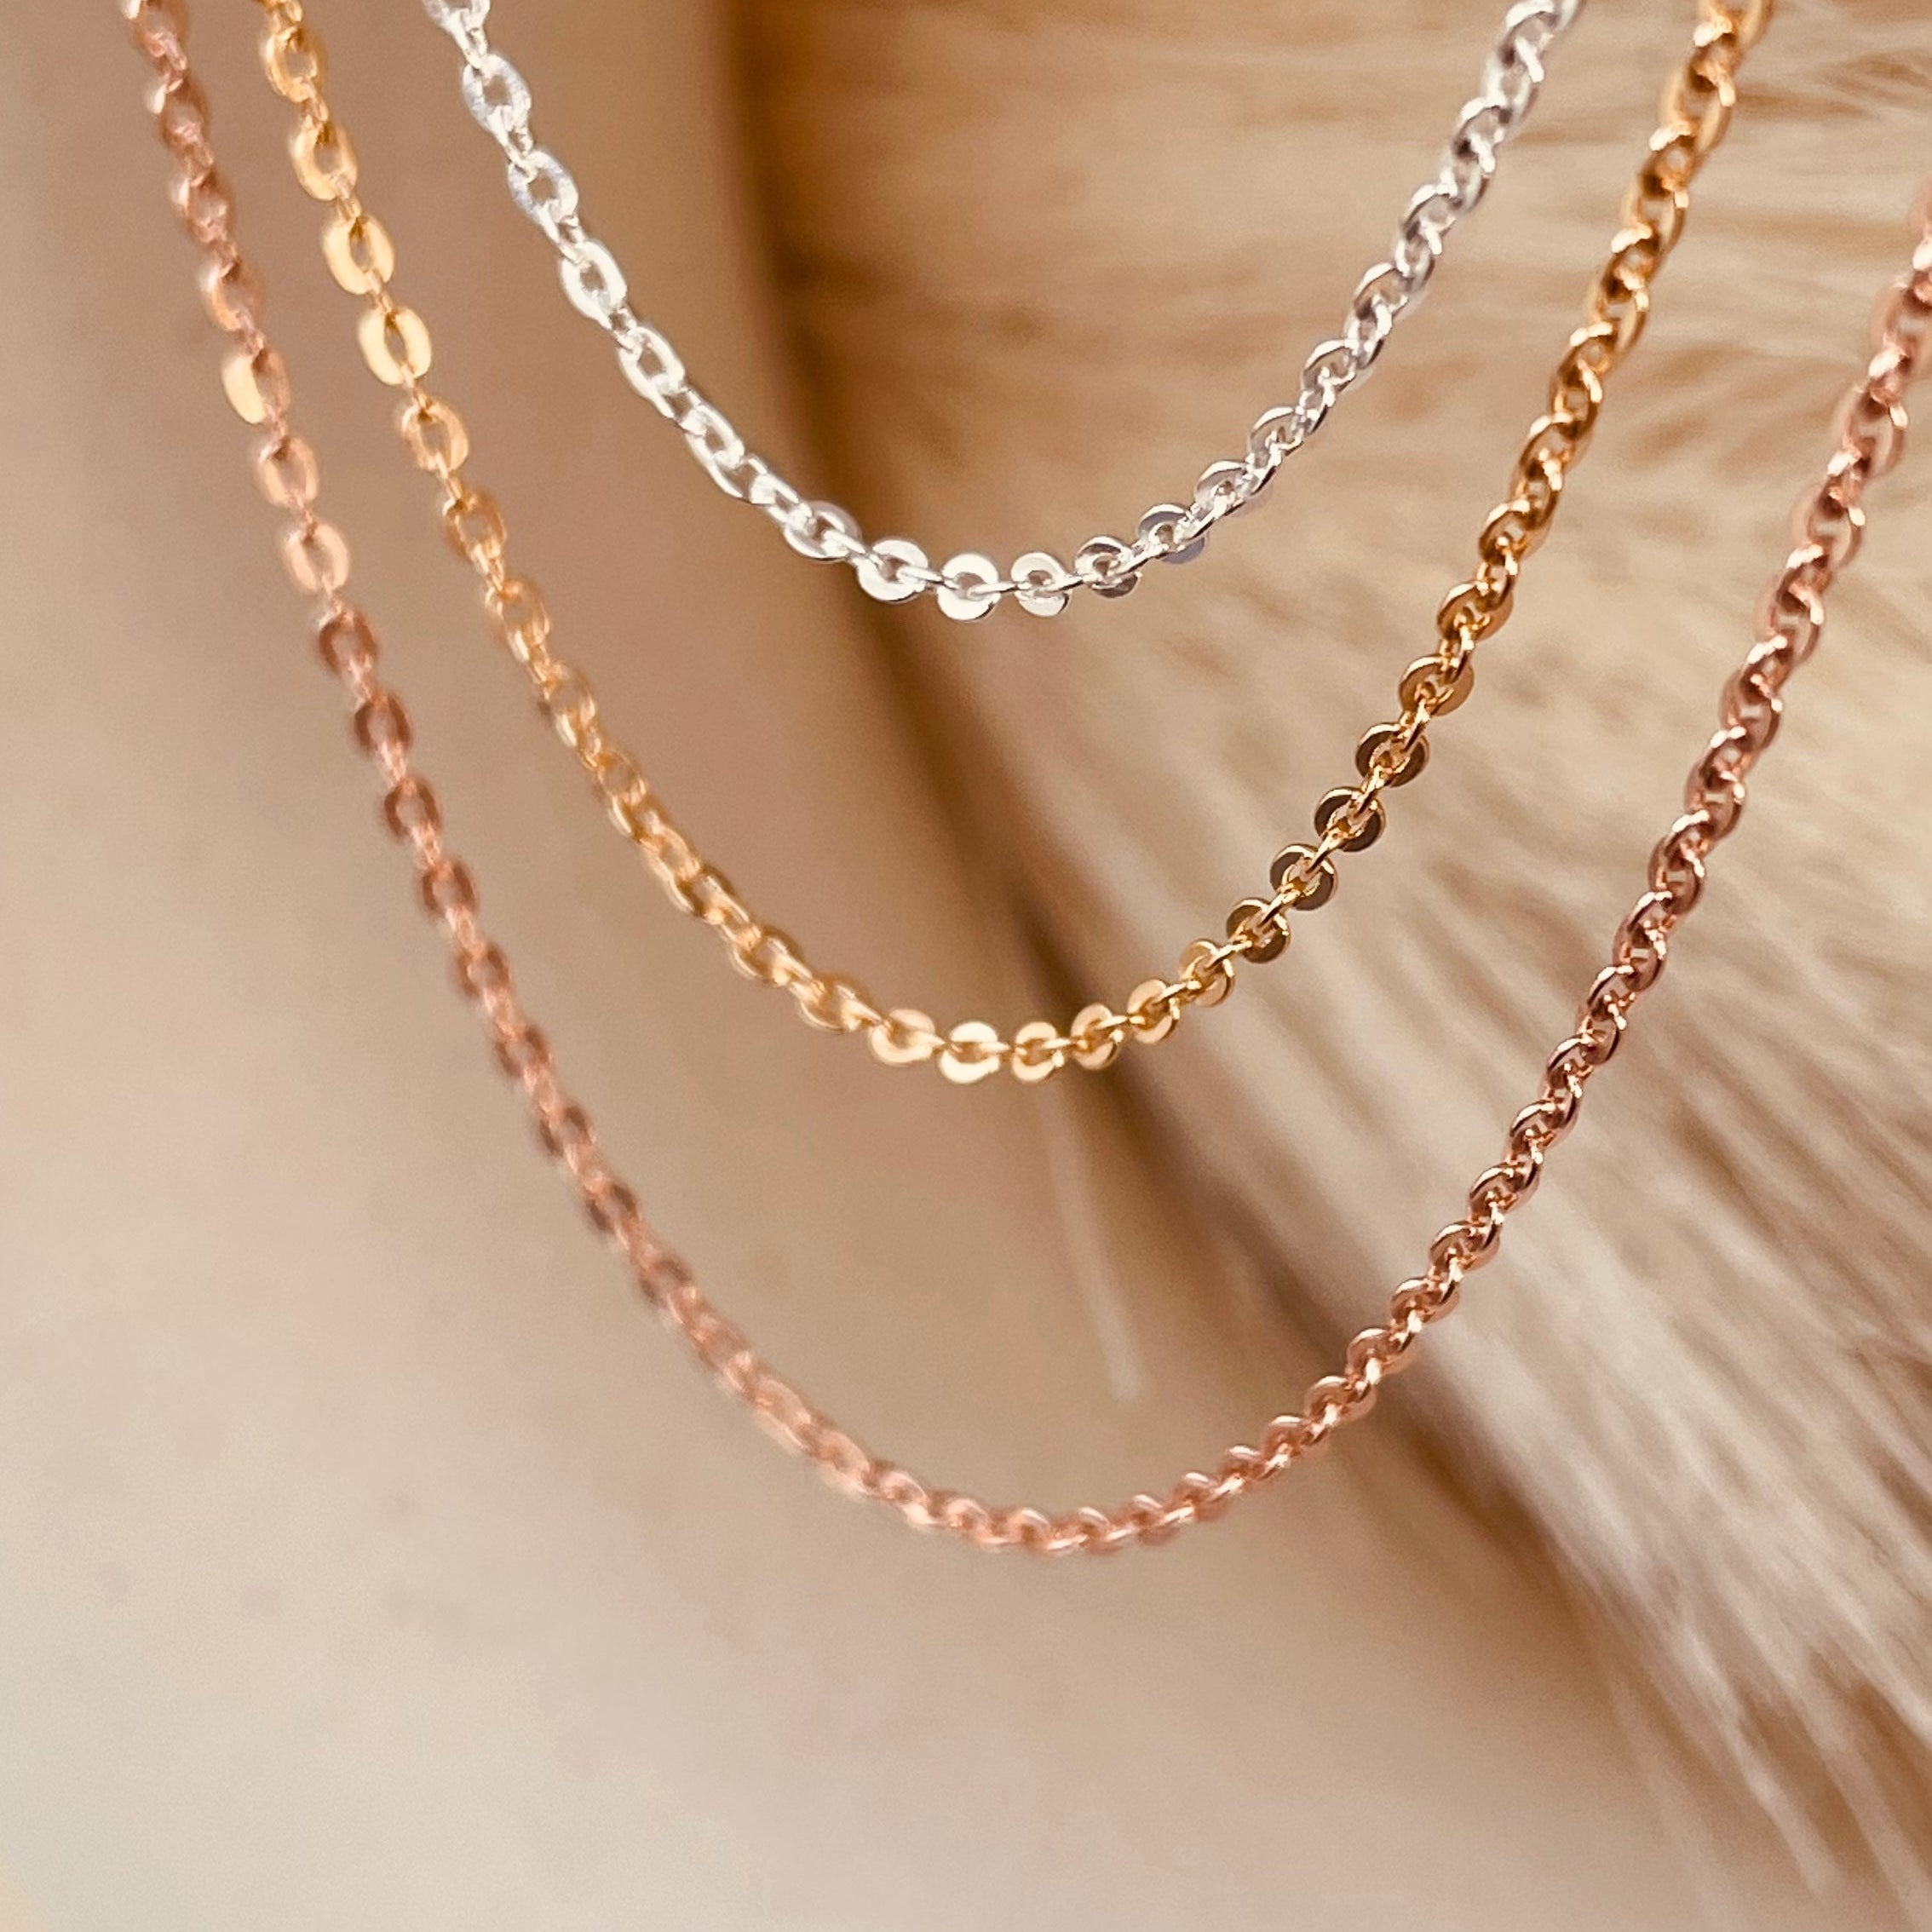 Silver Dainty Shine Sitara Chain Necklace - Octonov 